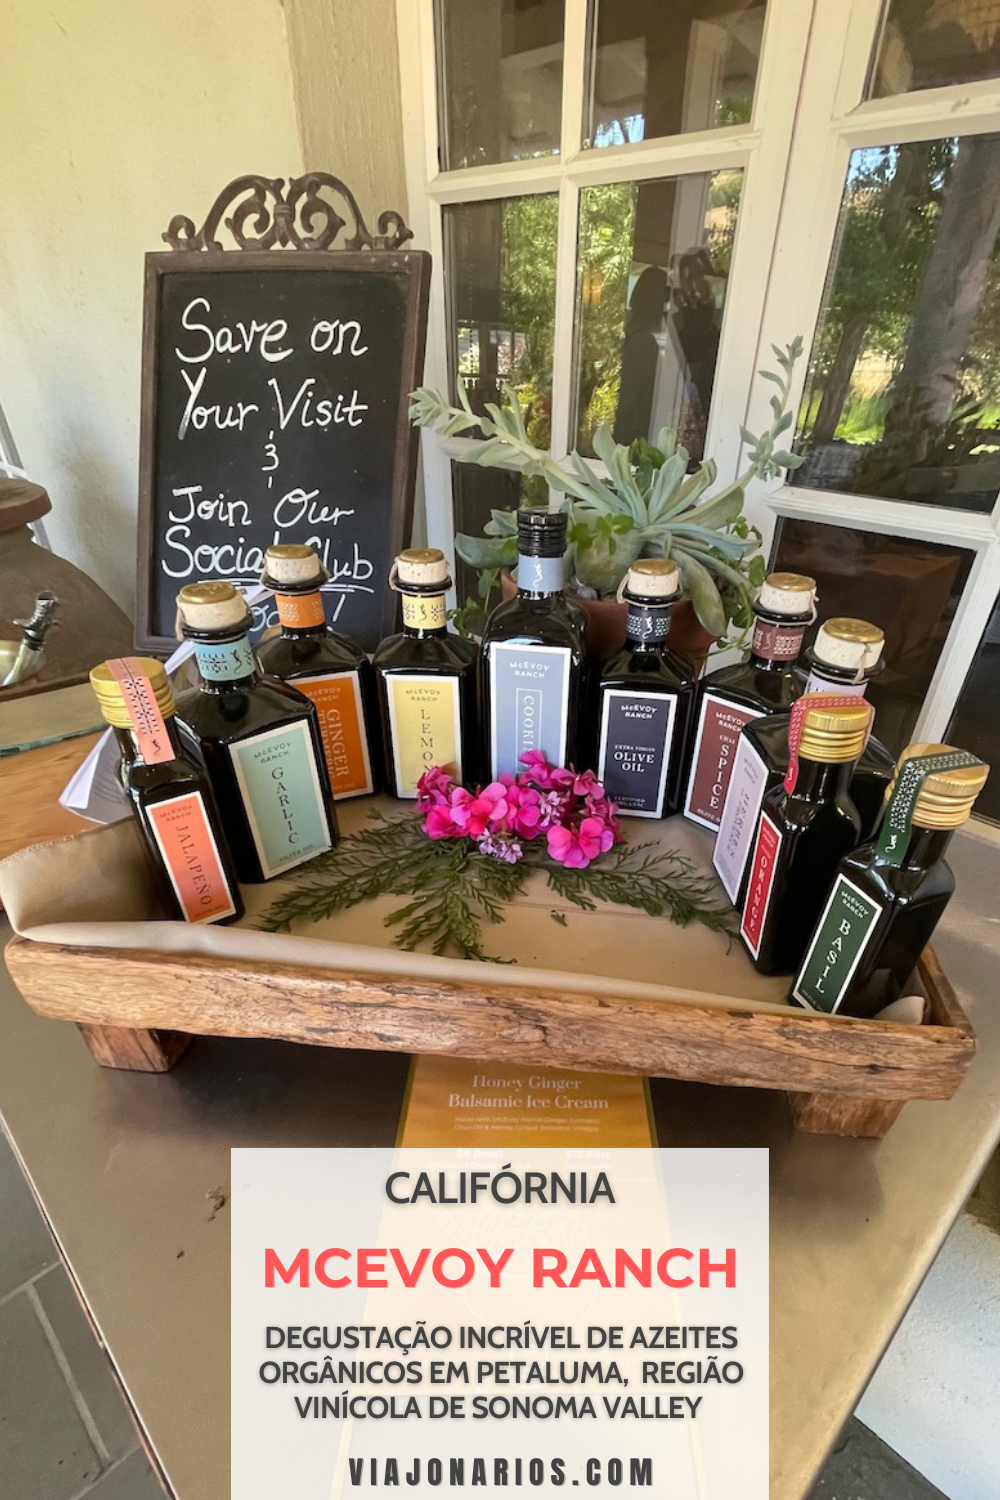 McEvoy Ranch: Oil Tasting in Petaluma, California | https://viajonarios.com/mcevoy-ranch/ | #viajonarios #mcevoyranch #oliveoil #azeite #degustacaodeoiltasting #oliveoiltasting #california #sonomavalley #organic #organic #extravirgem #azeitona #tours #tastings